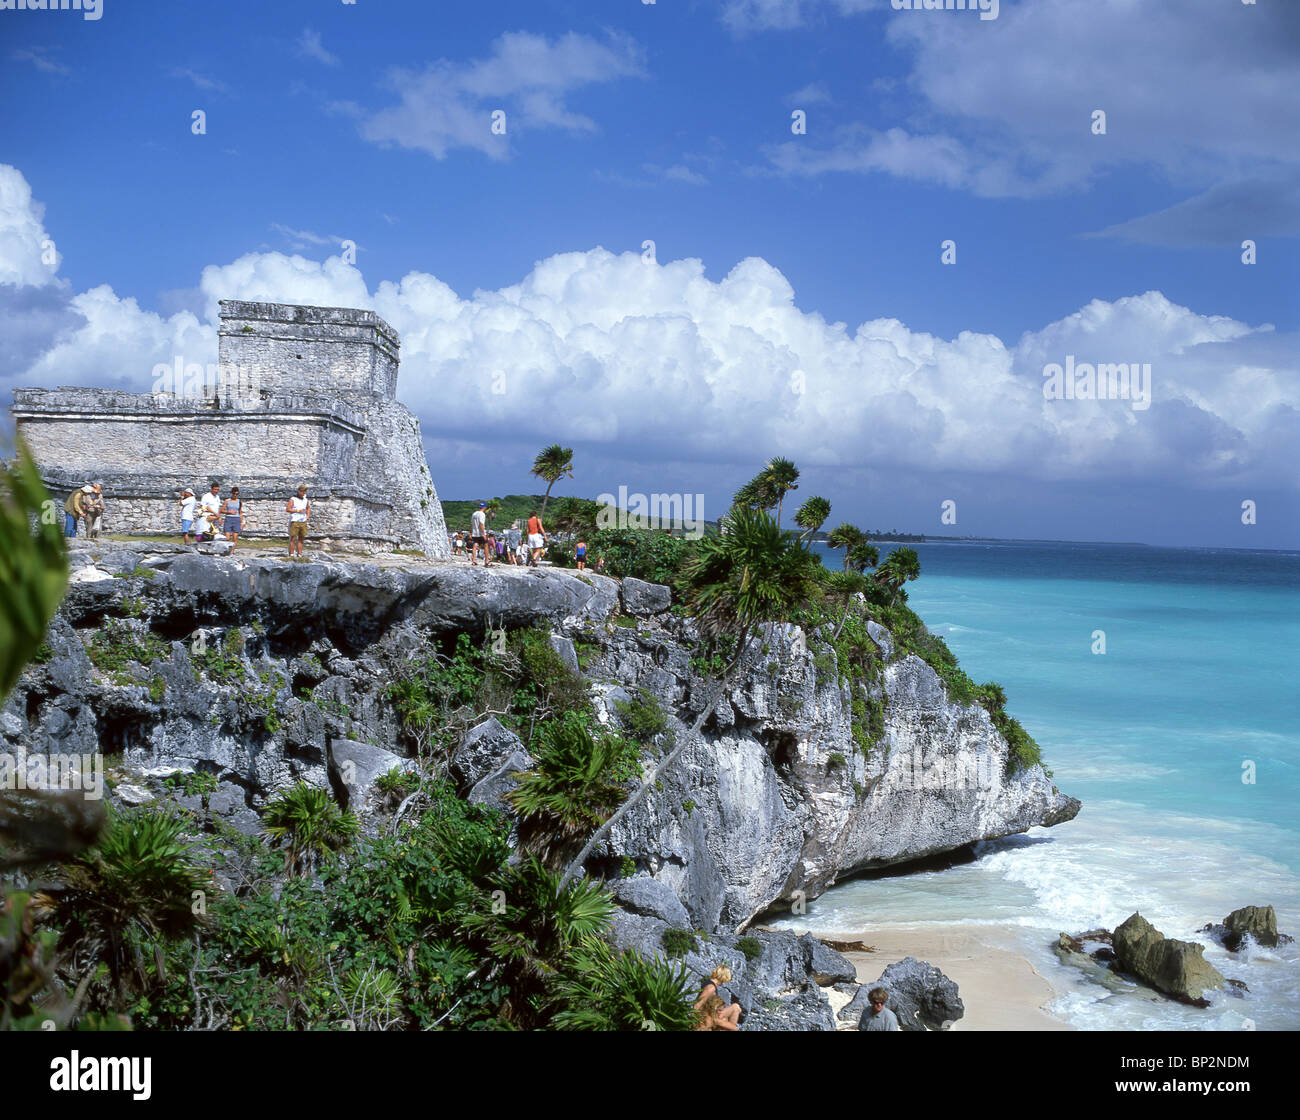 Maya Tempel archäologische Website, Tulum, Quintana Roo Zustand, Mexiko Stockfoto